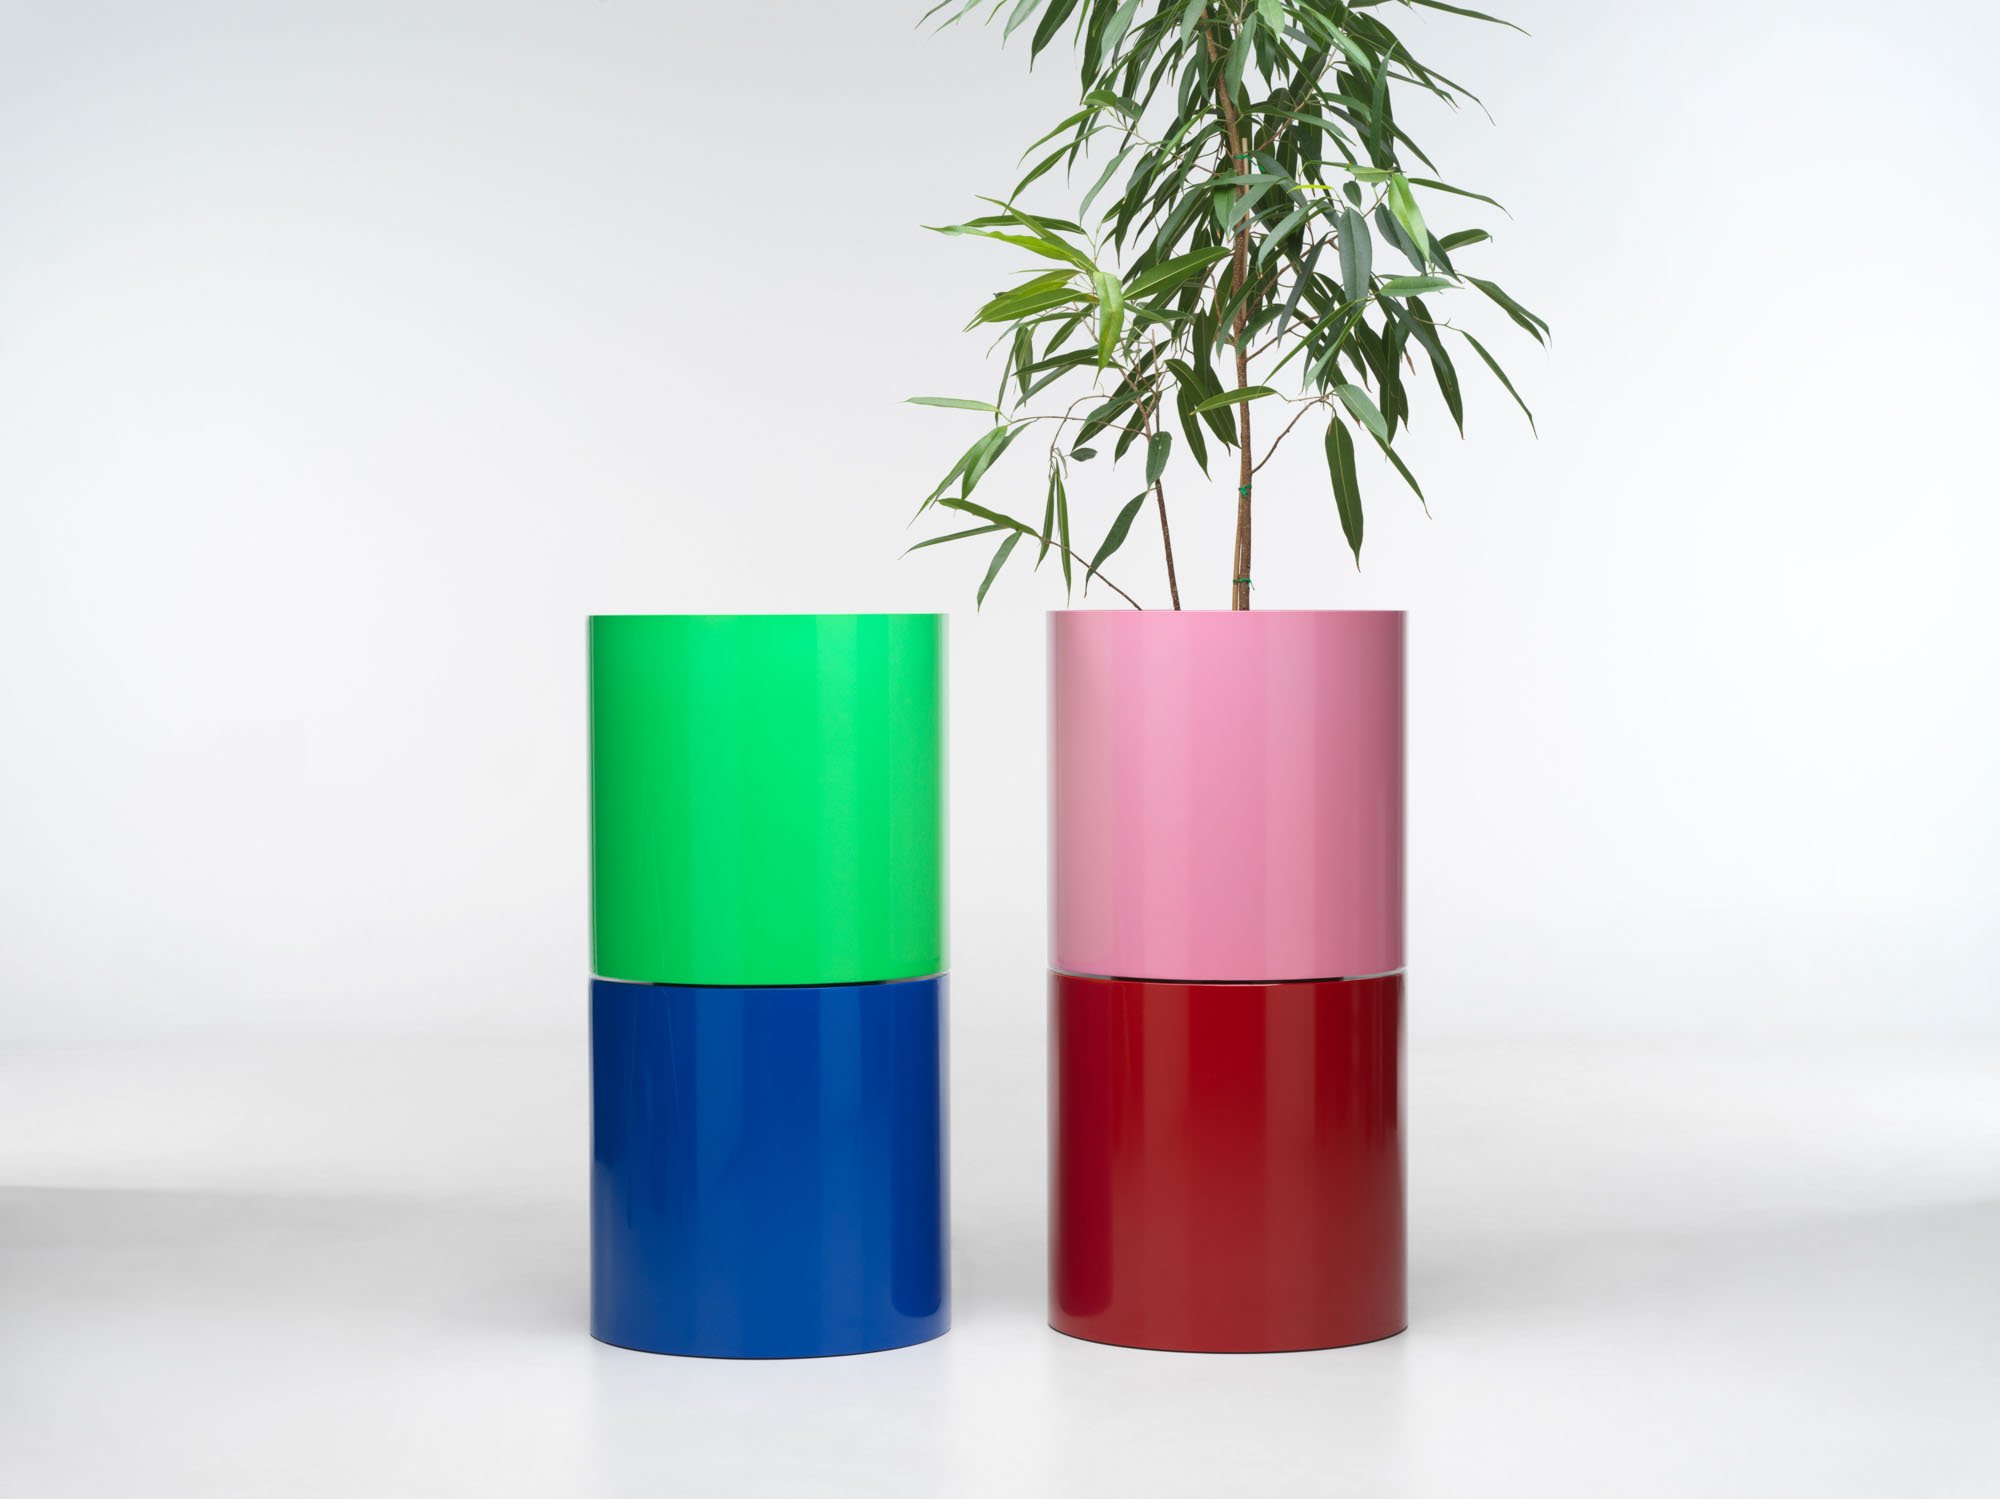 b8-red-pink-blue-green-planter-studiociao-ciao-XXX.jpeg